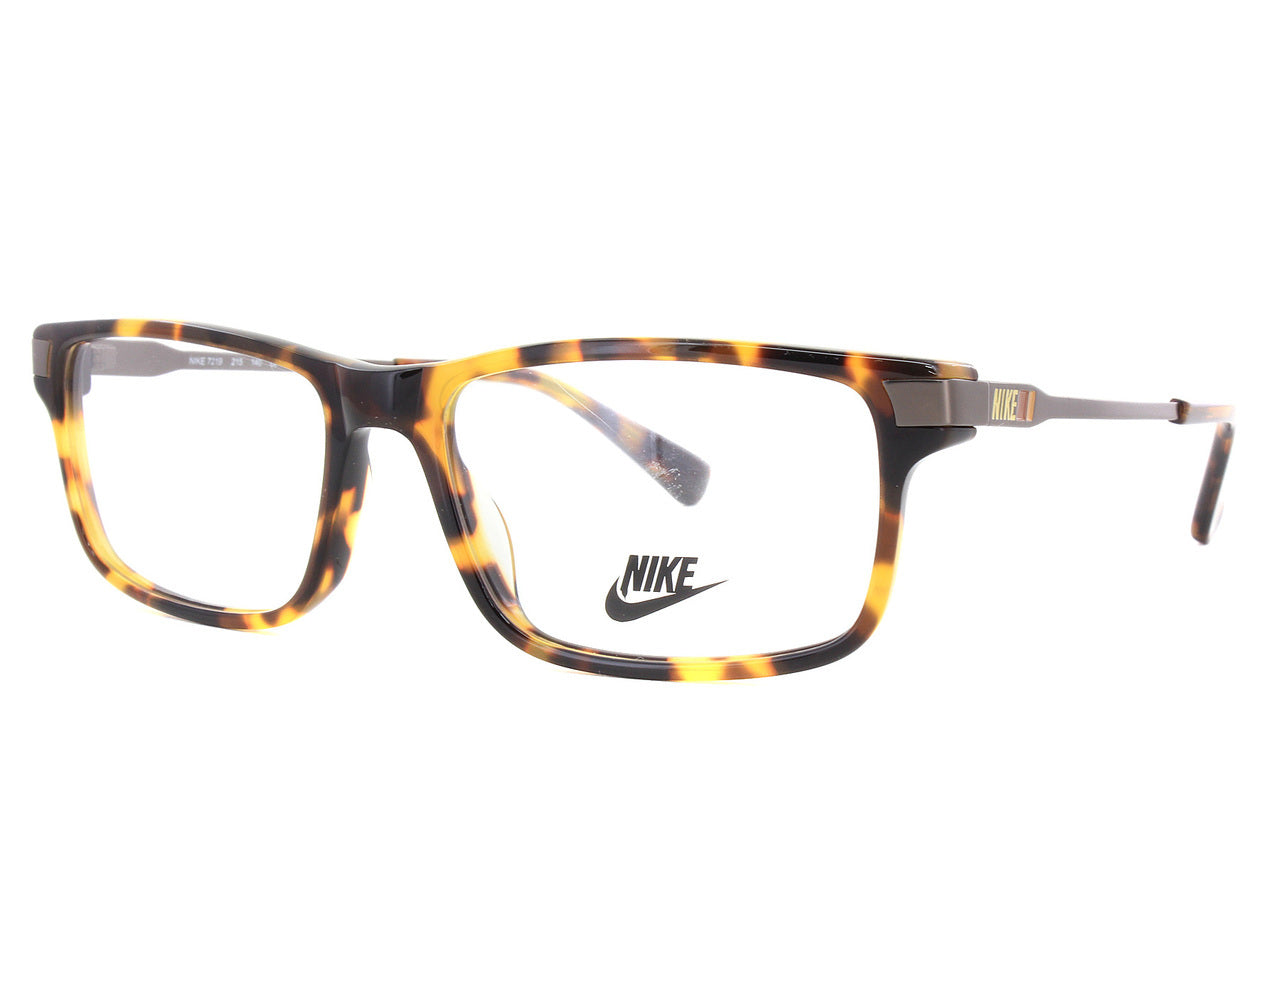 Nike 7219-215-5216 52mm New Eyeglasses